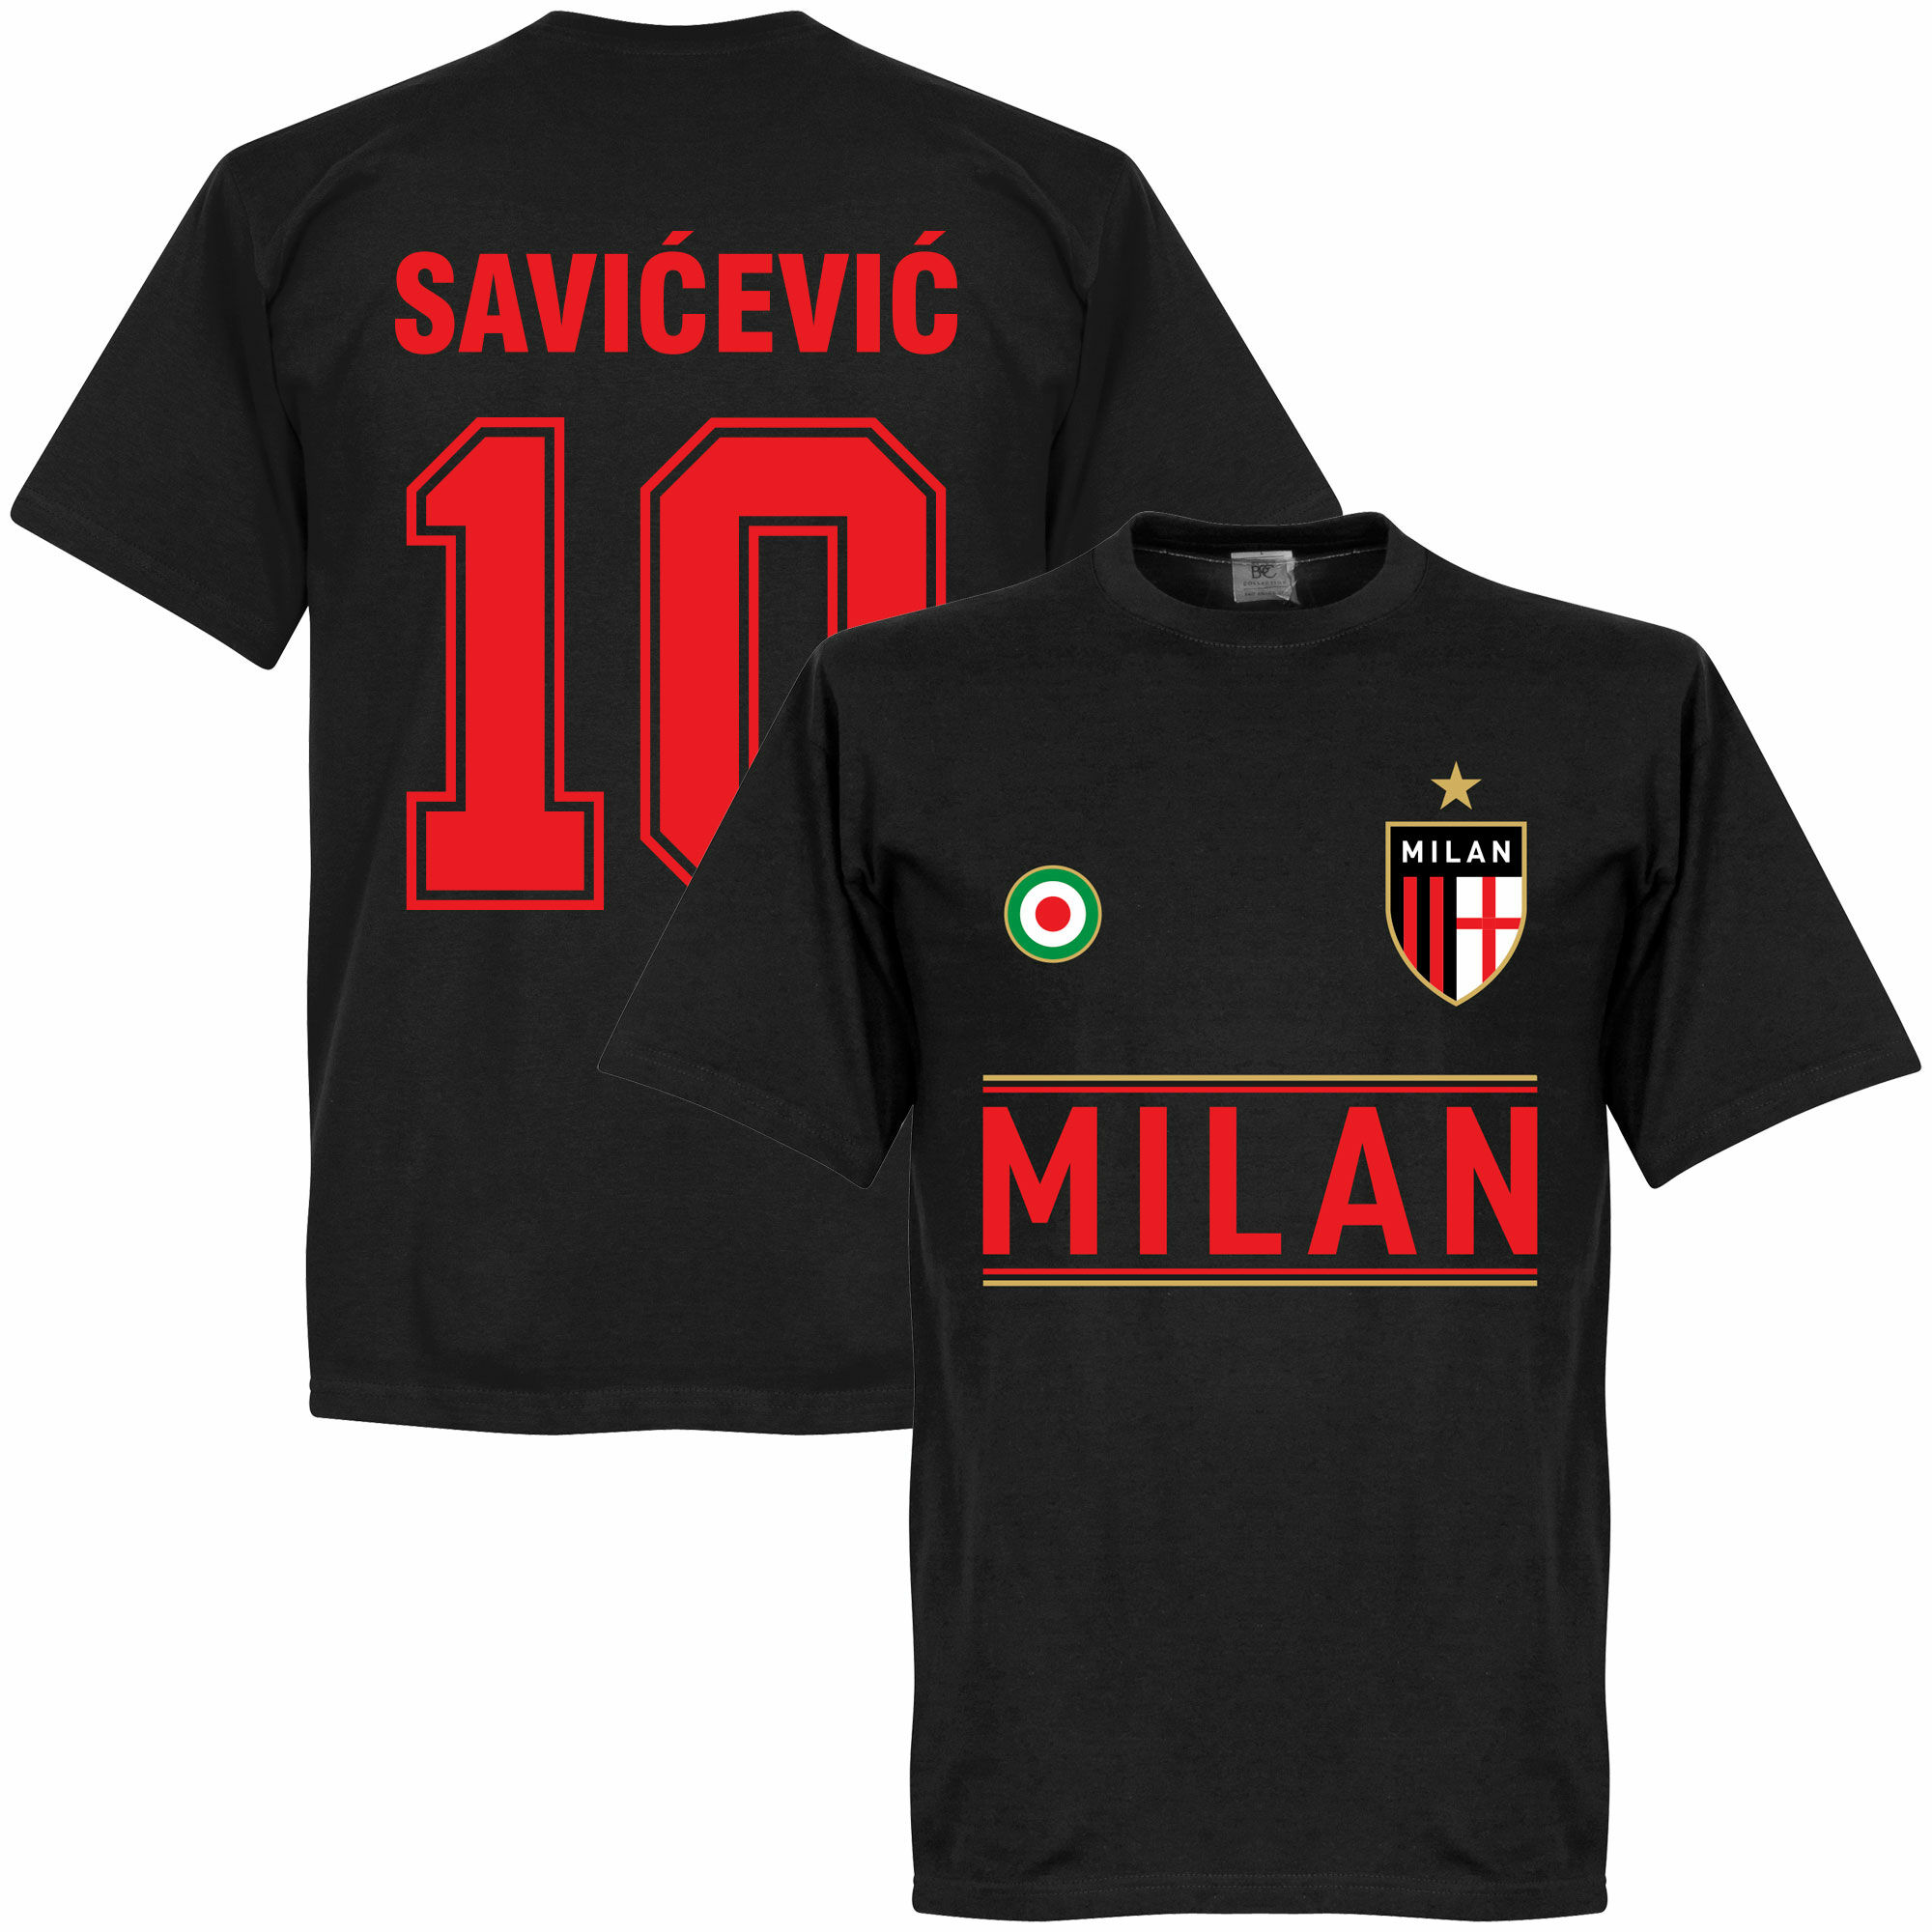 AC Milán - Tričko - Dejan Savićević, číslo 10, černé